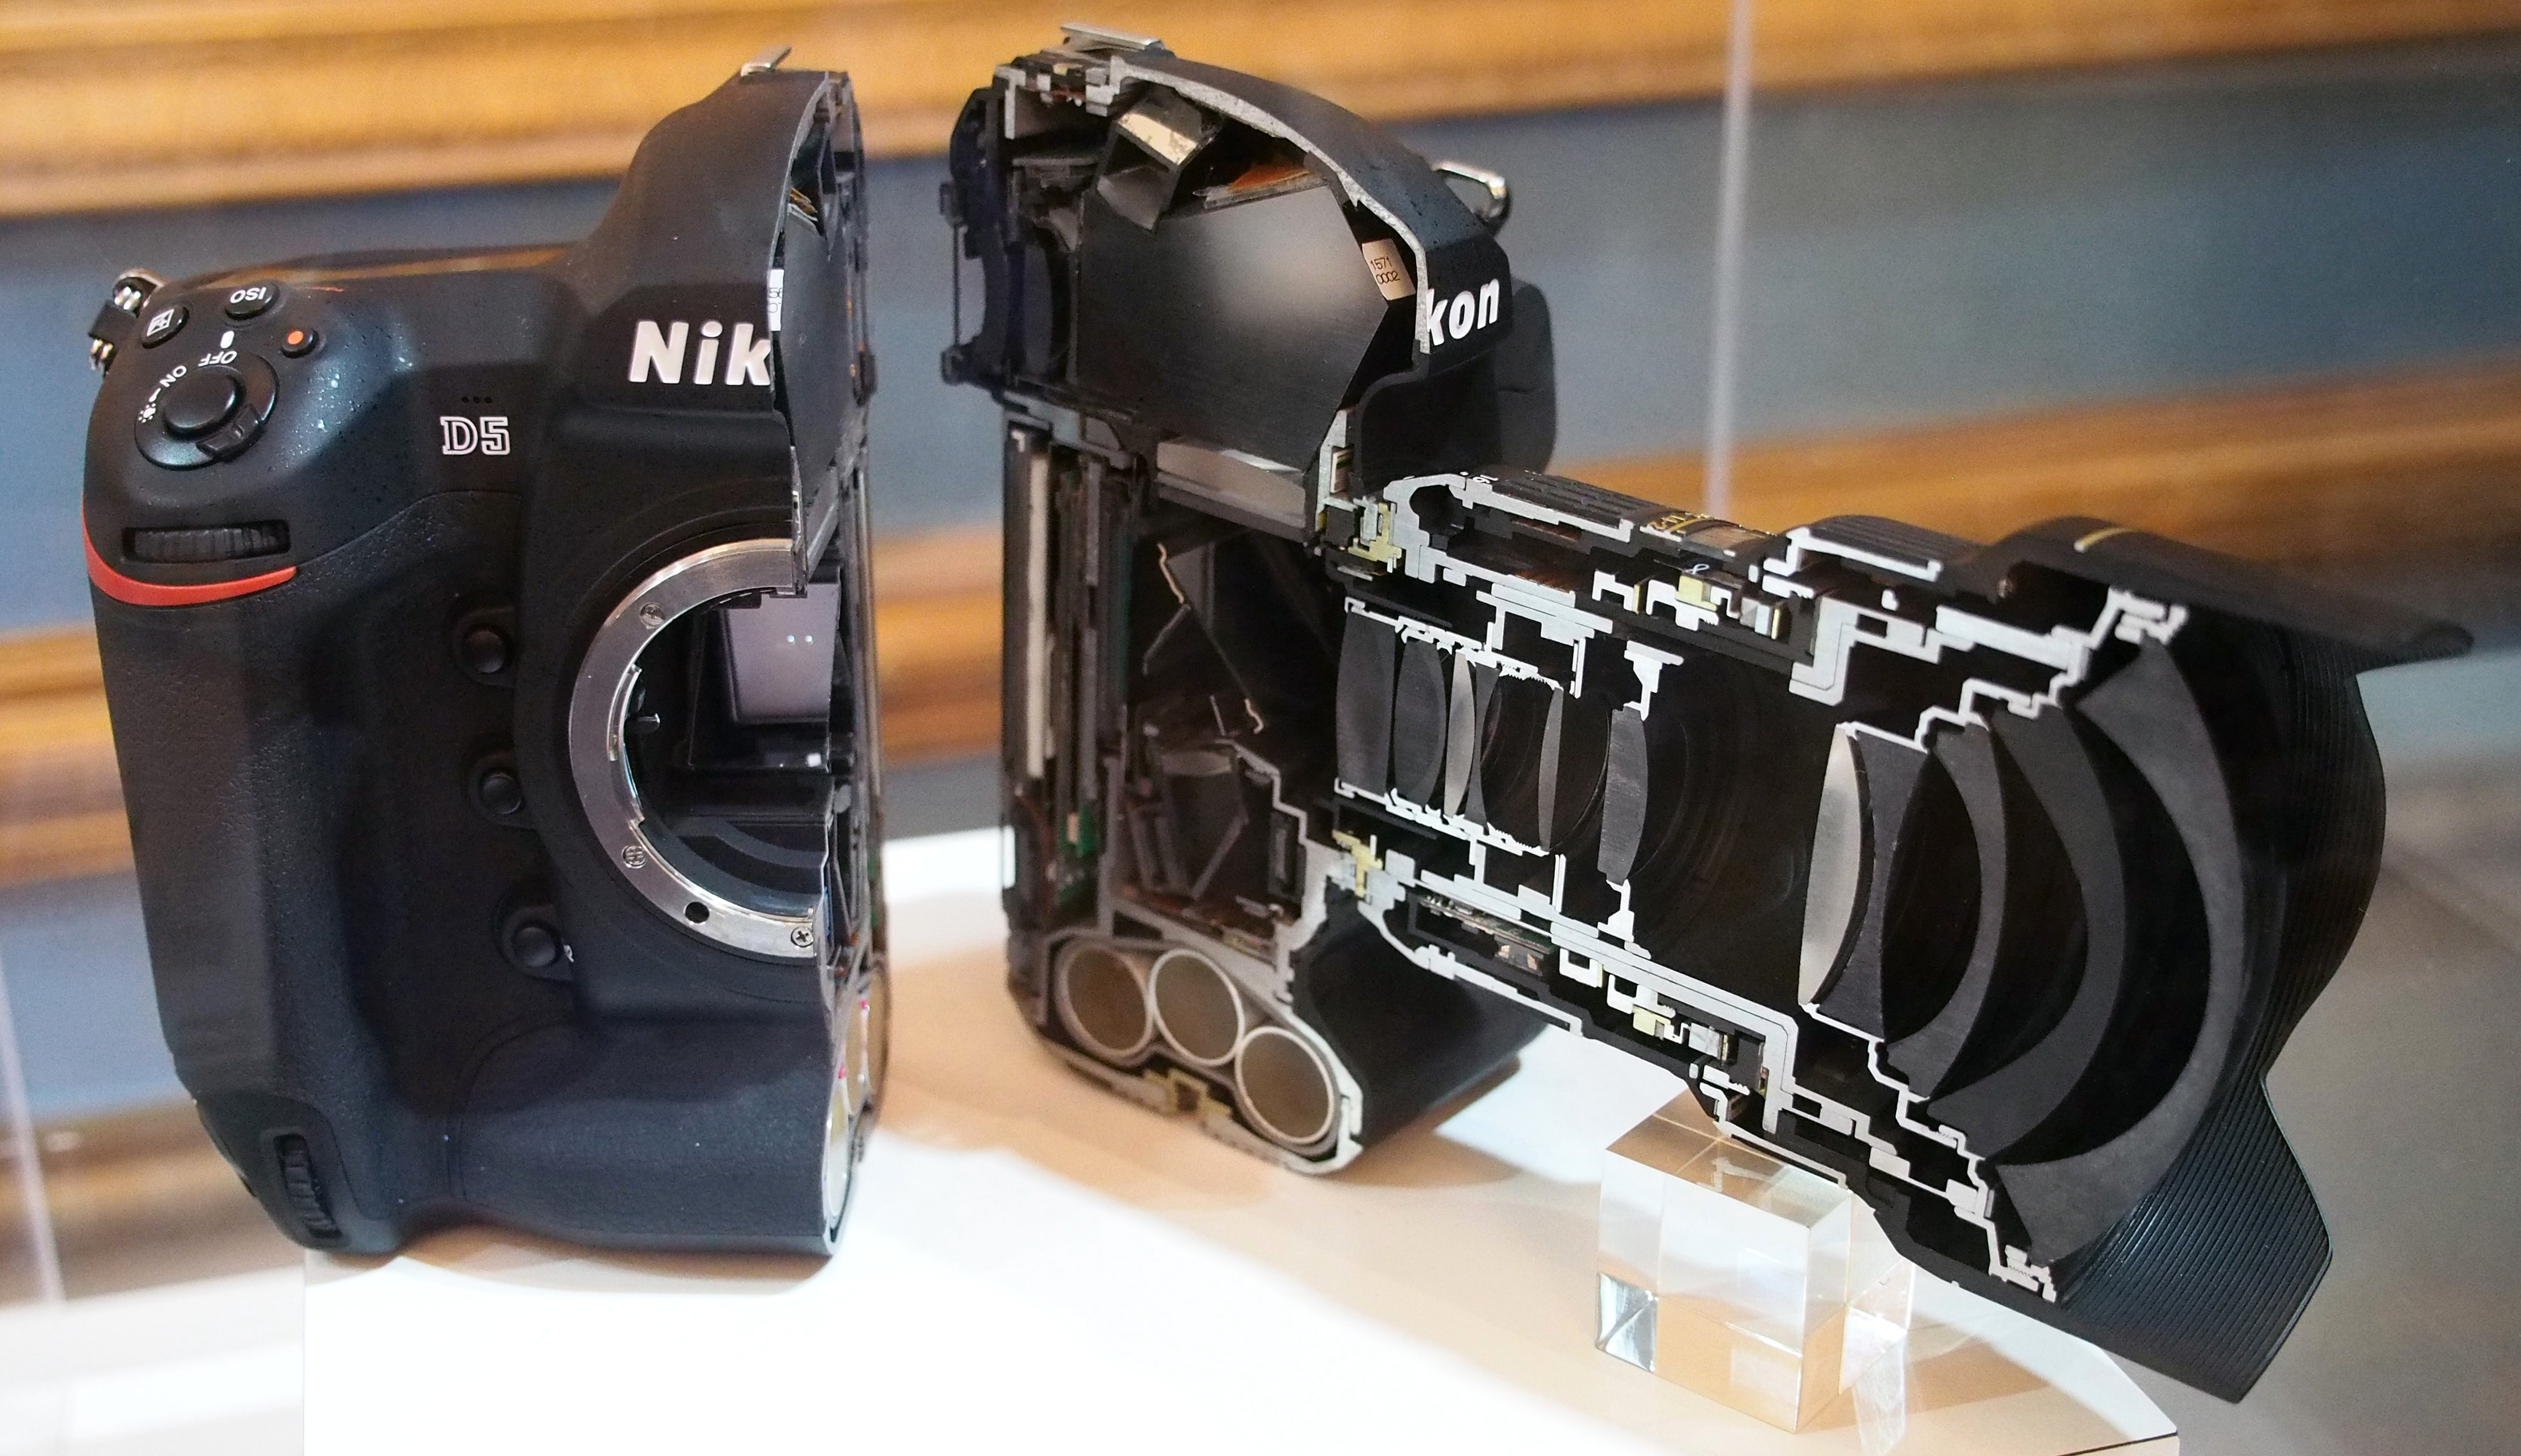 Appareil photo Nikon D80 noir avec objectif, sacoche et kit nettoyage -  Nikon